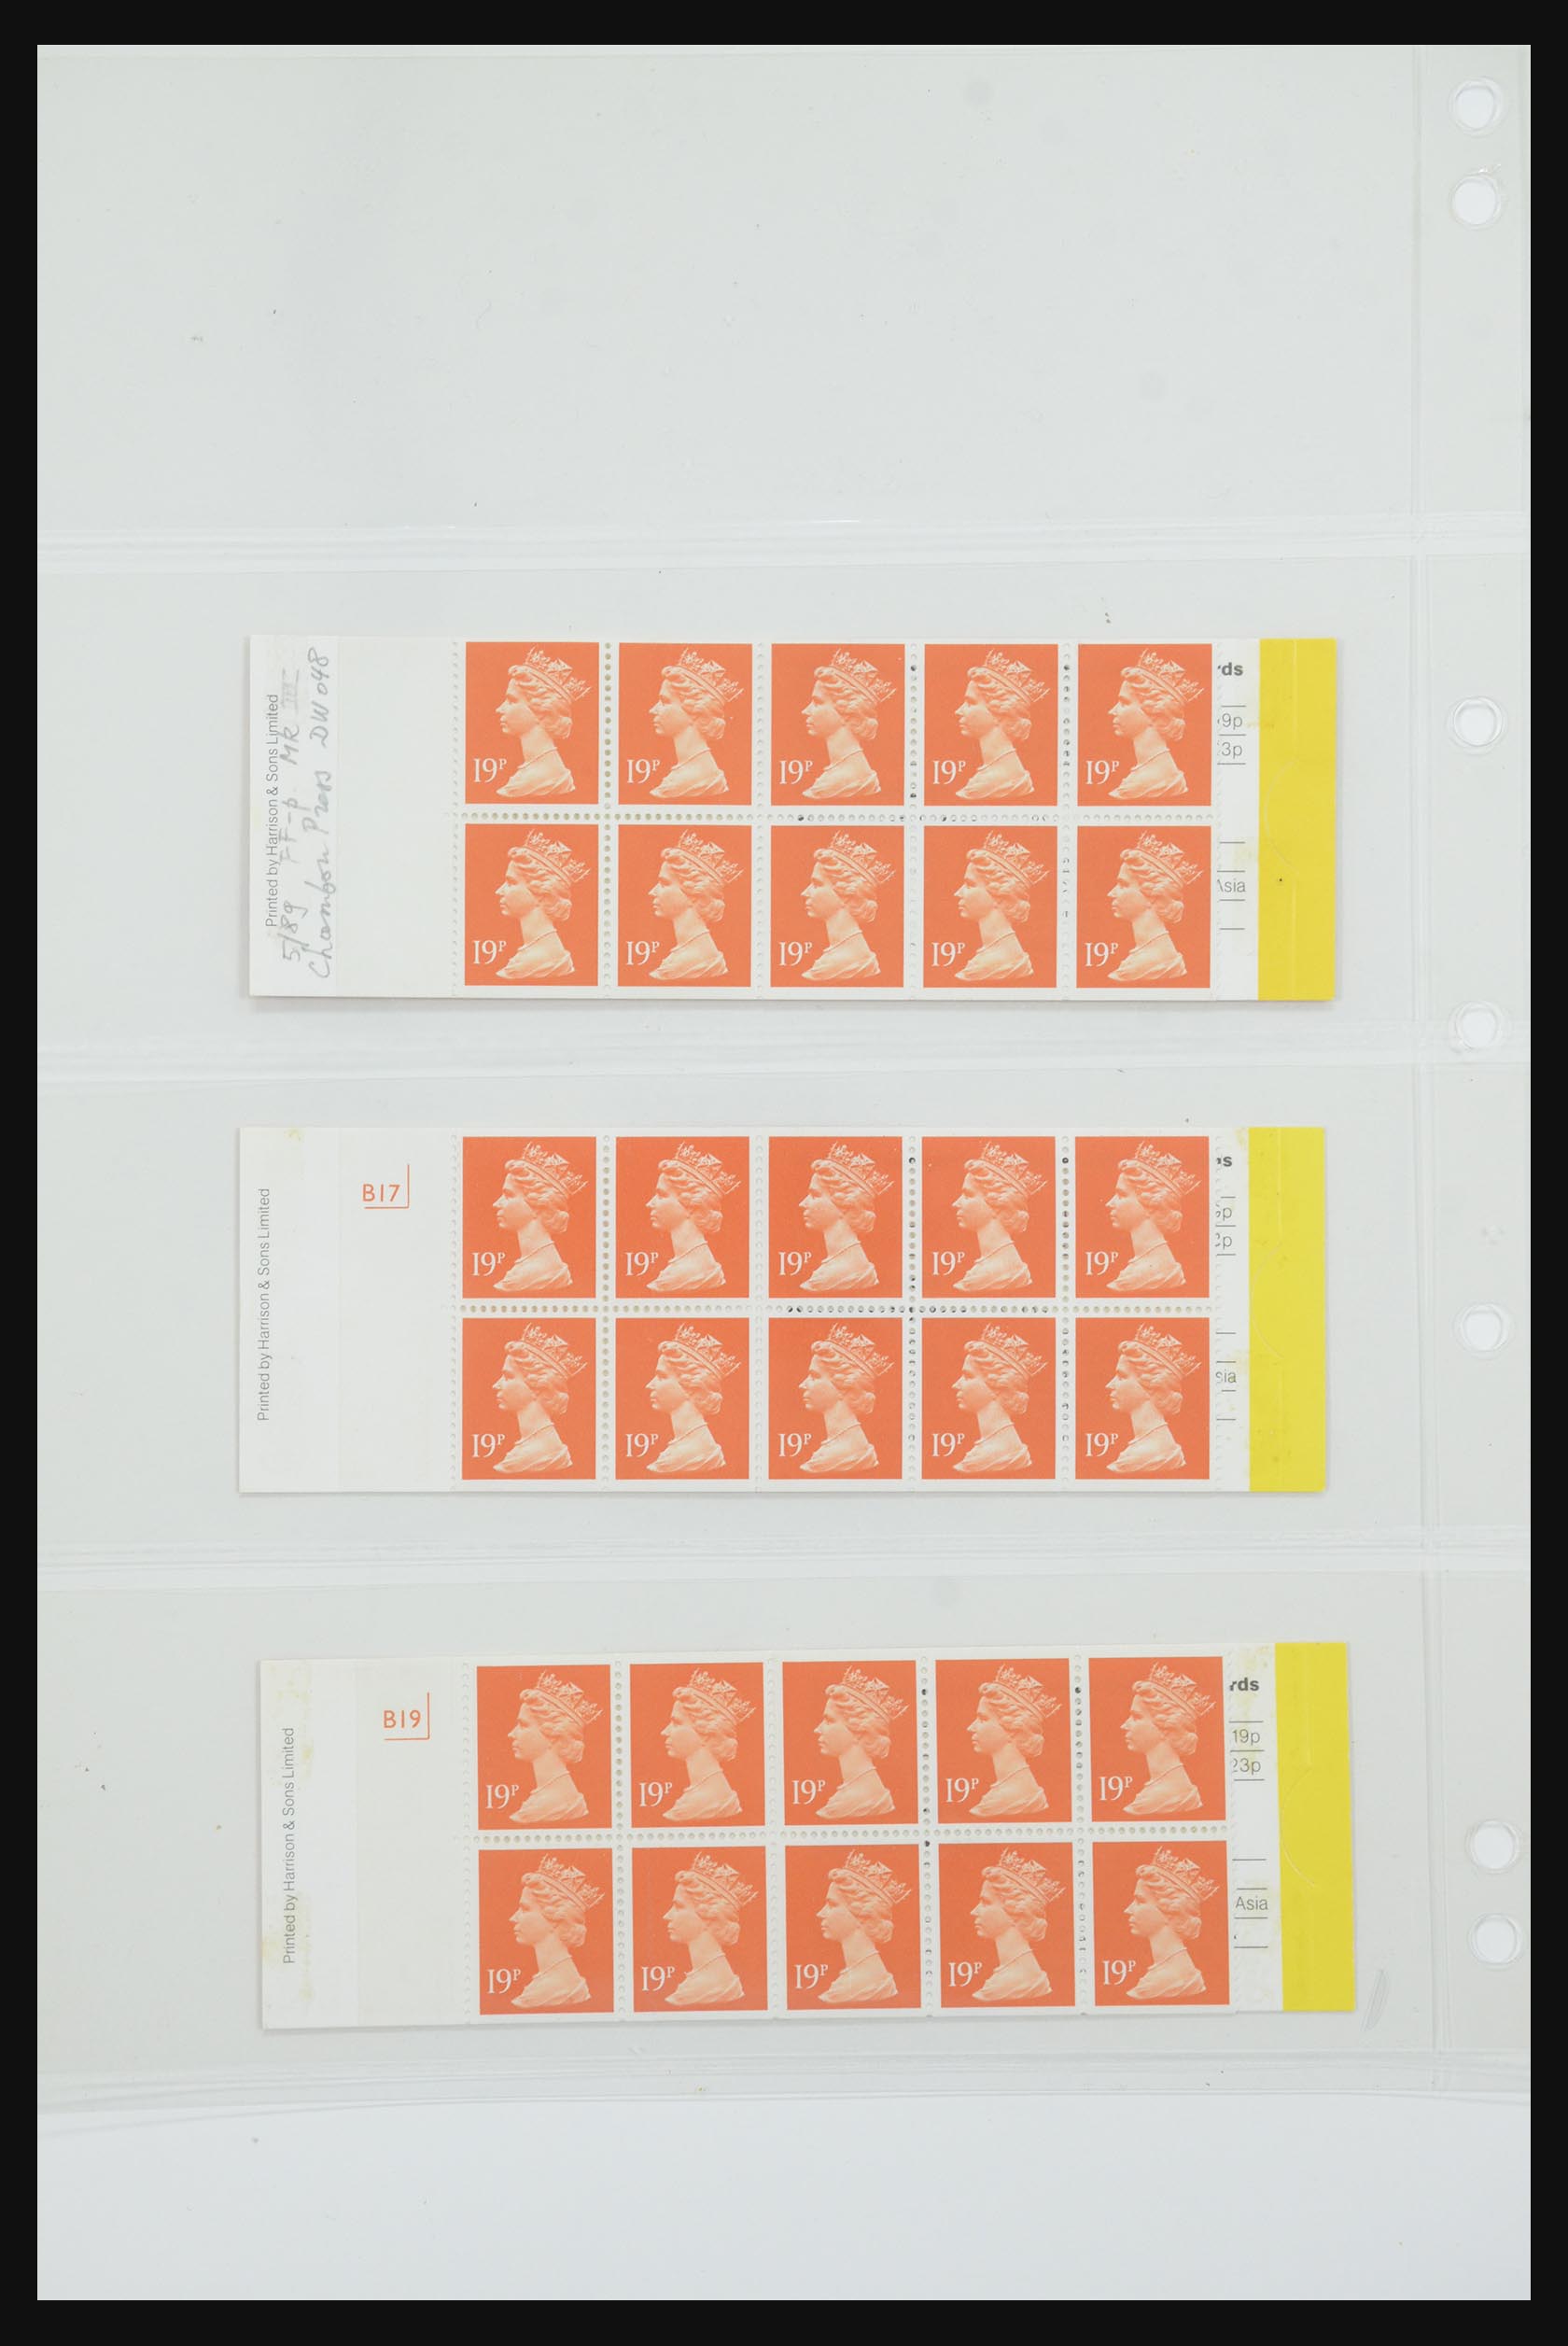 31959 074 - 31959 Great Britain stampbooklets 1987-2016!!